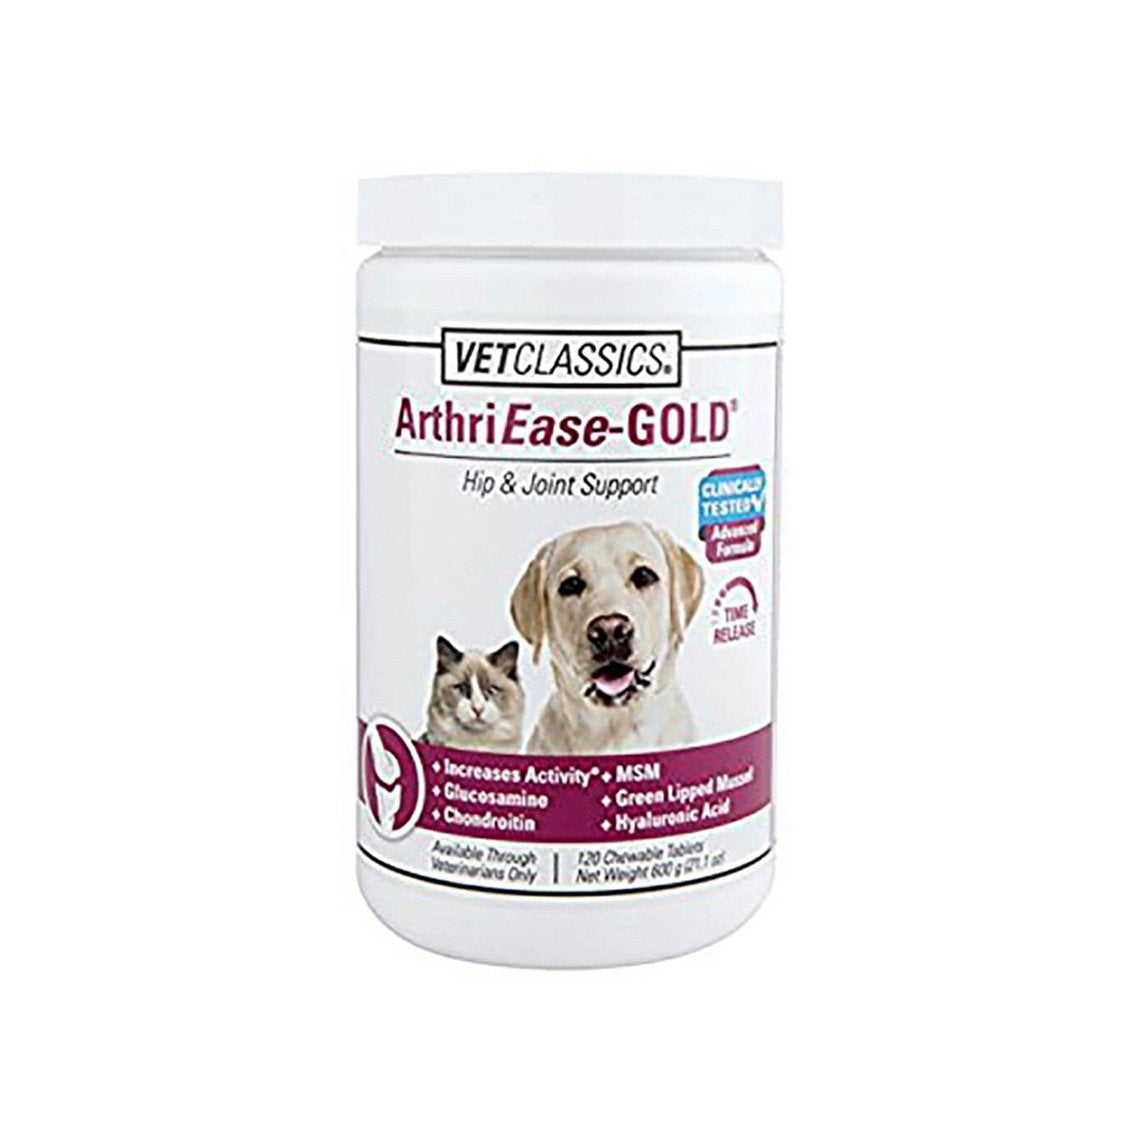 VetClassics ArthriEase-Gold Pet Supplement